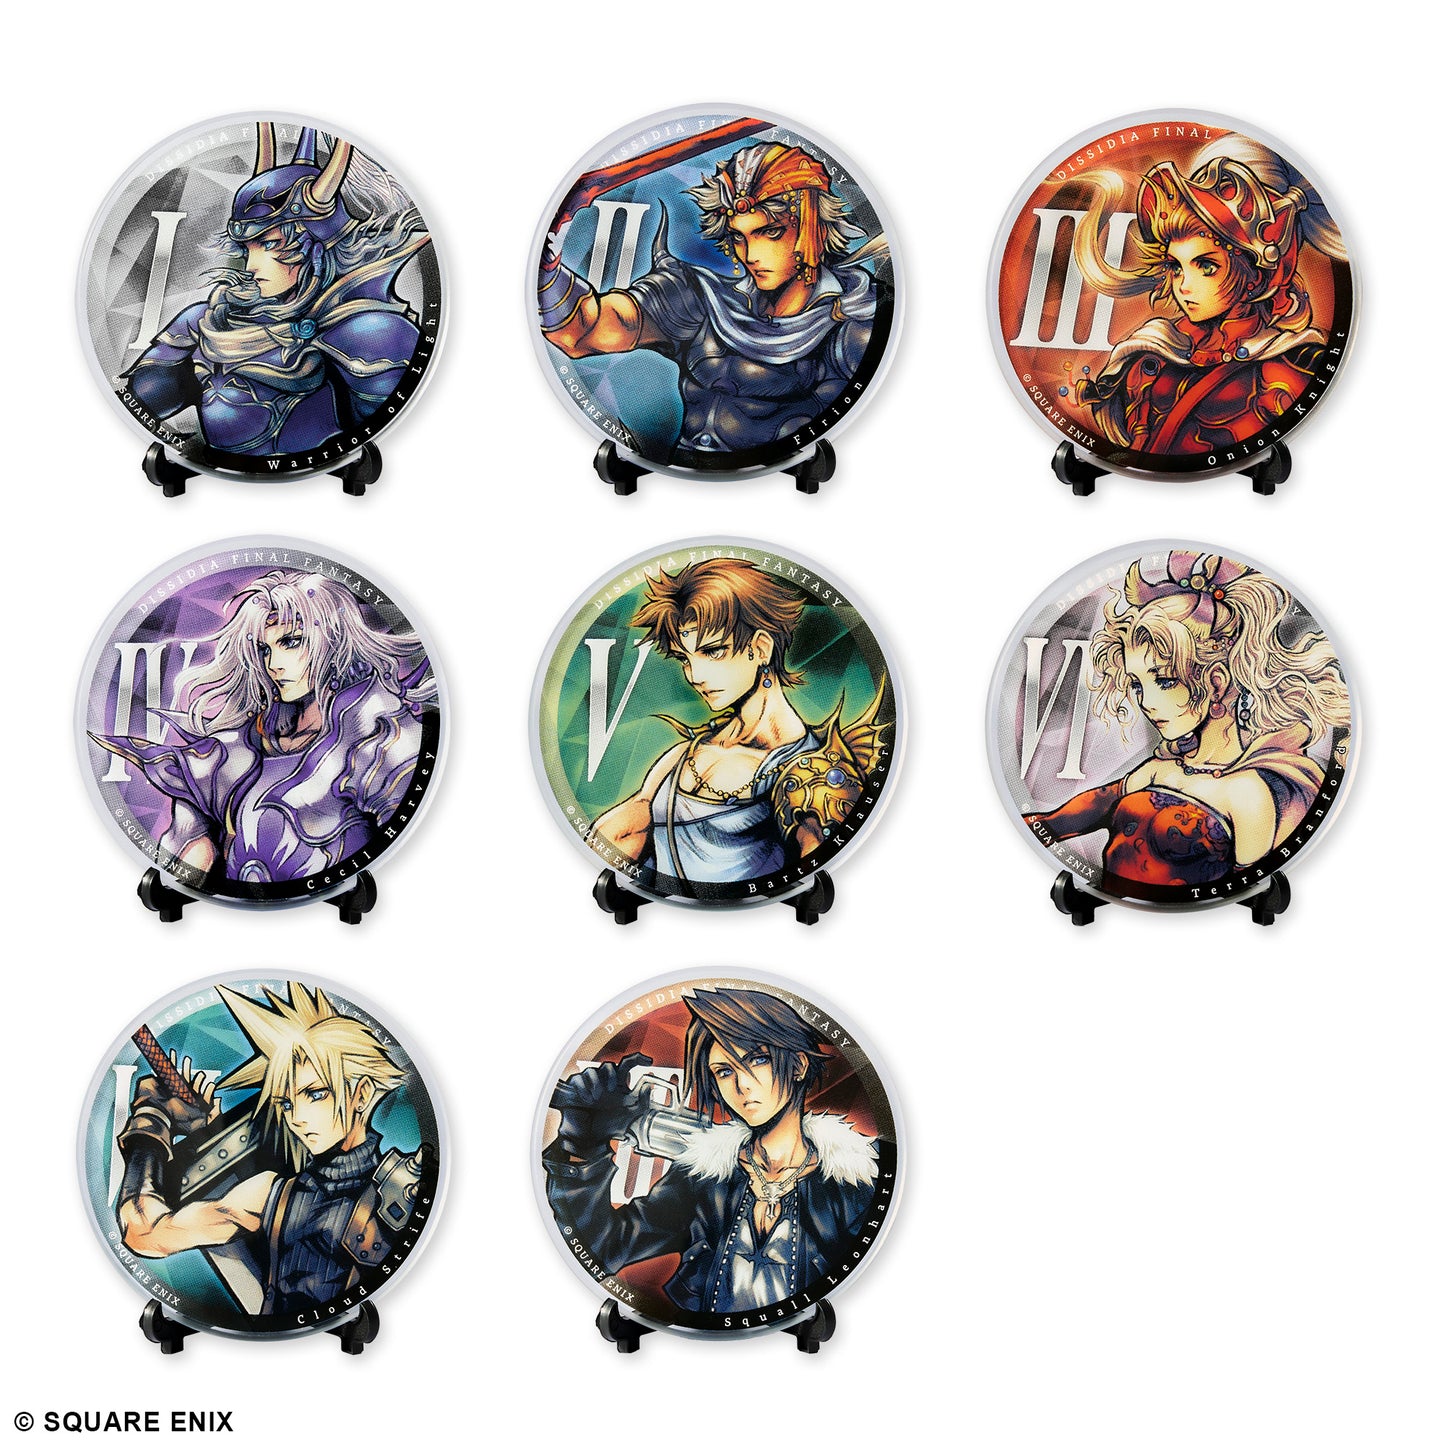 "Dissidia Final Fantasy" Glass Plate Collection Vol. 1